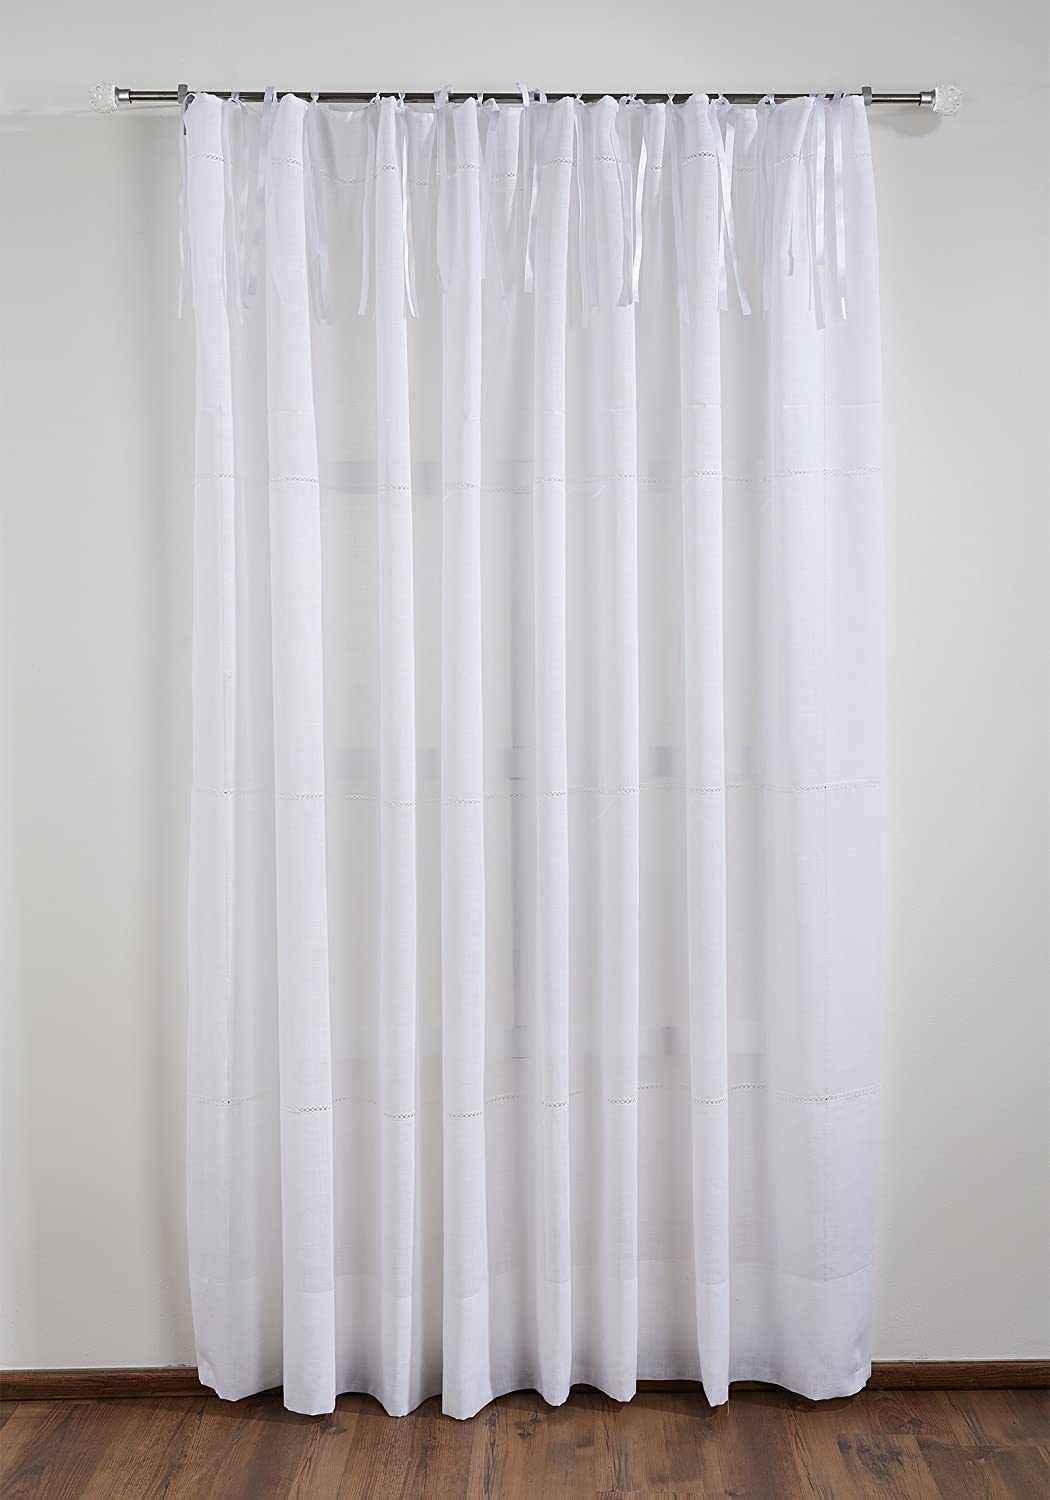 Christiane Wegner 0400-07 Curtain Panel White / White 1 x 2.25 m with White Satin Ribbons